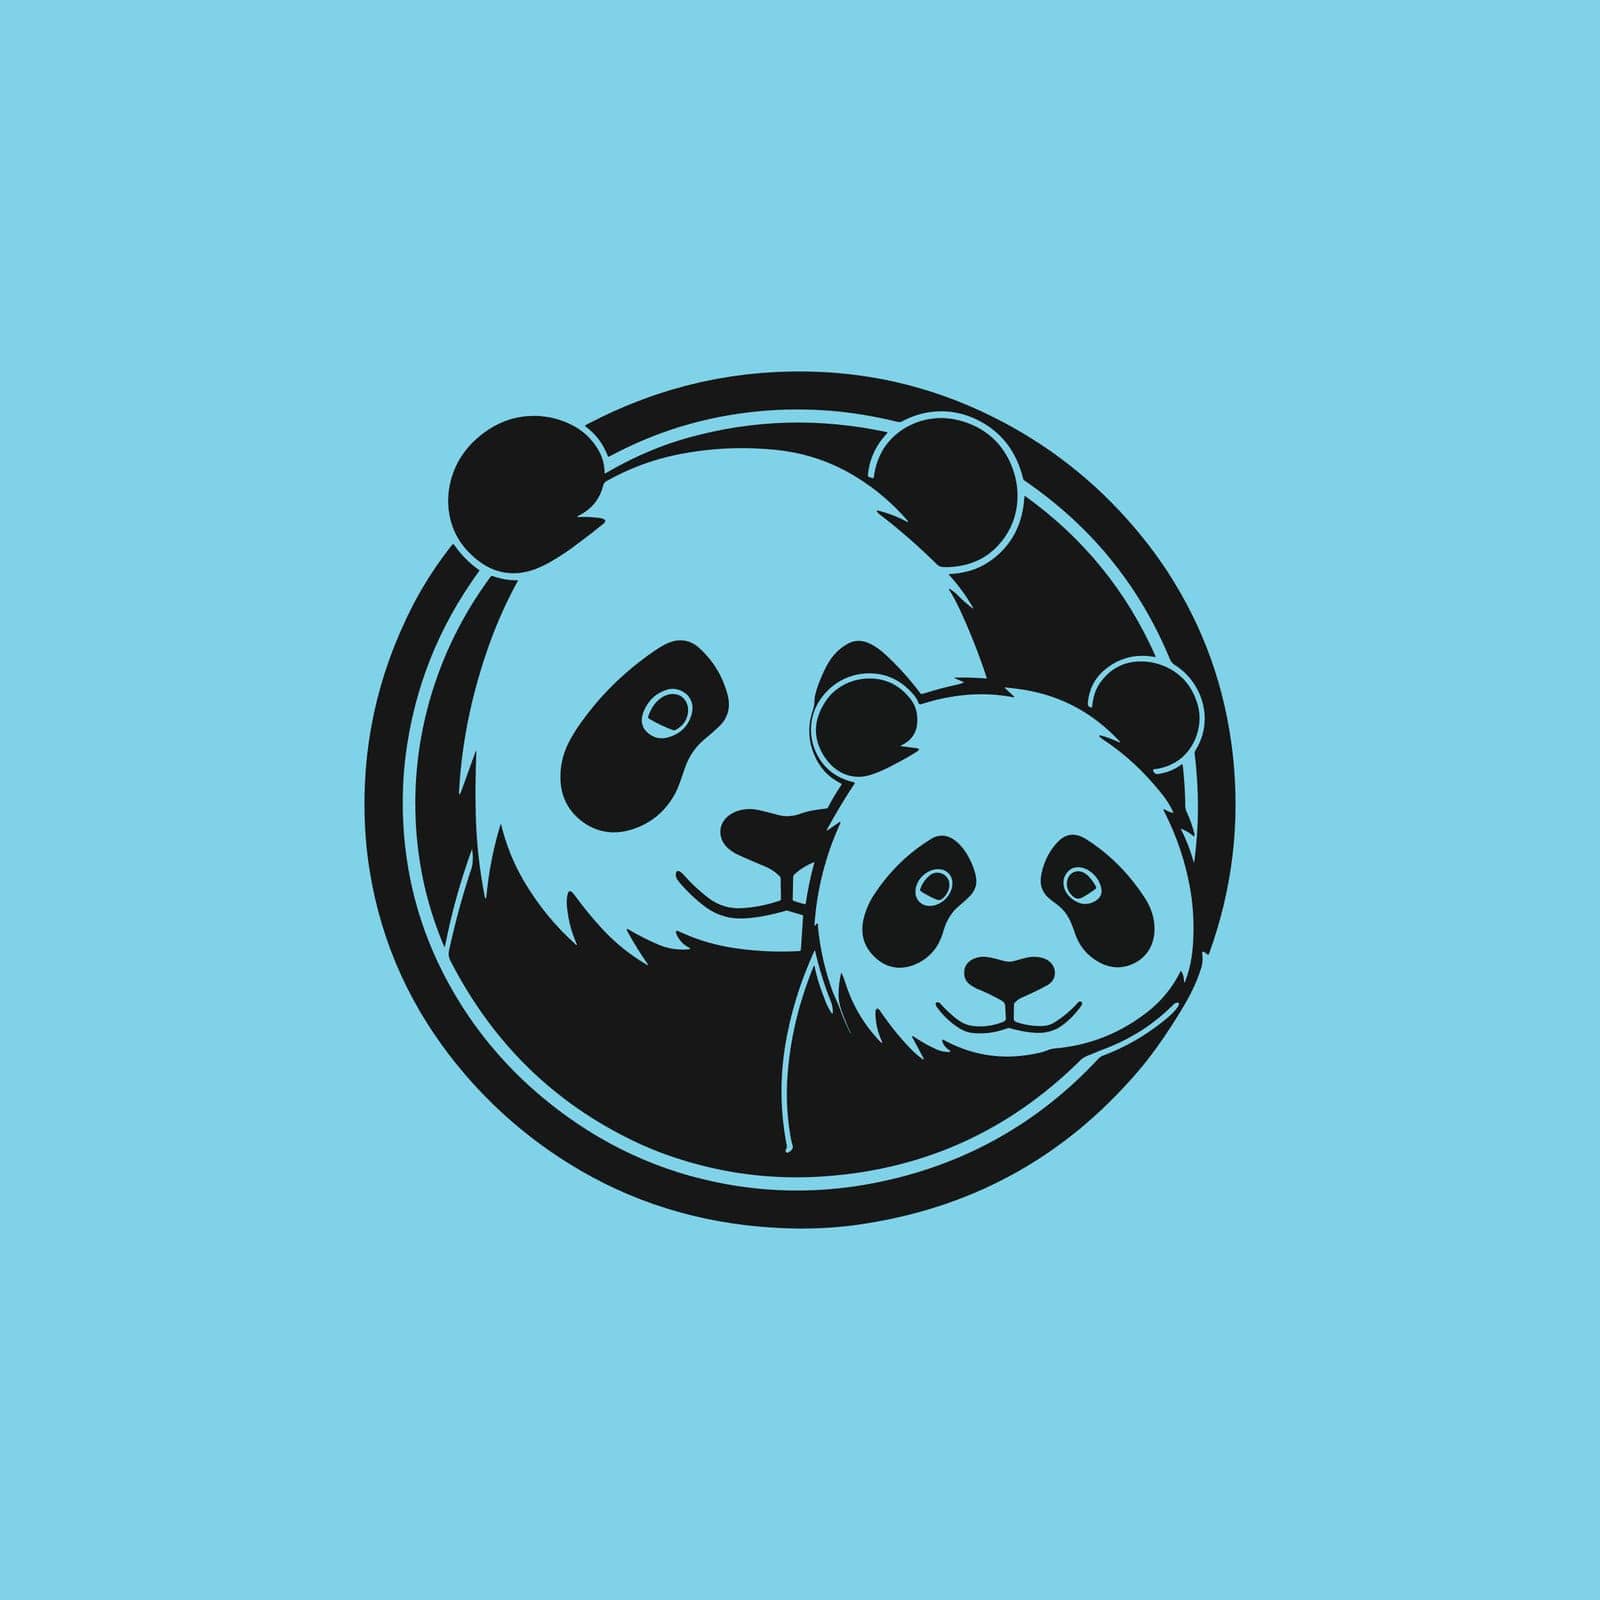 two panda head zoomed in circular black by Vinhsino